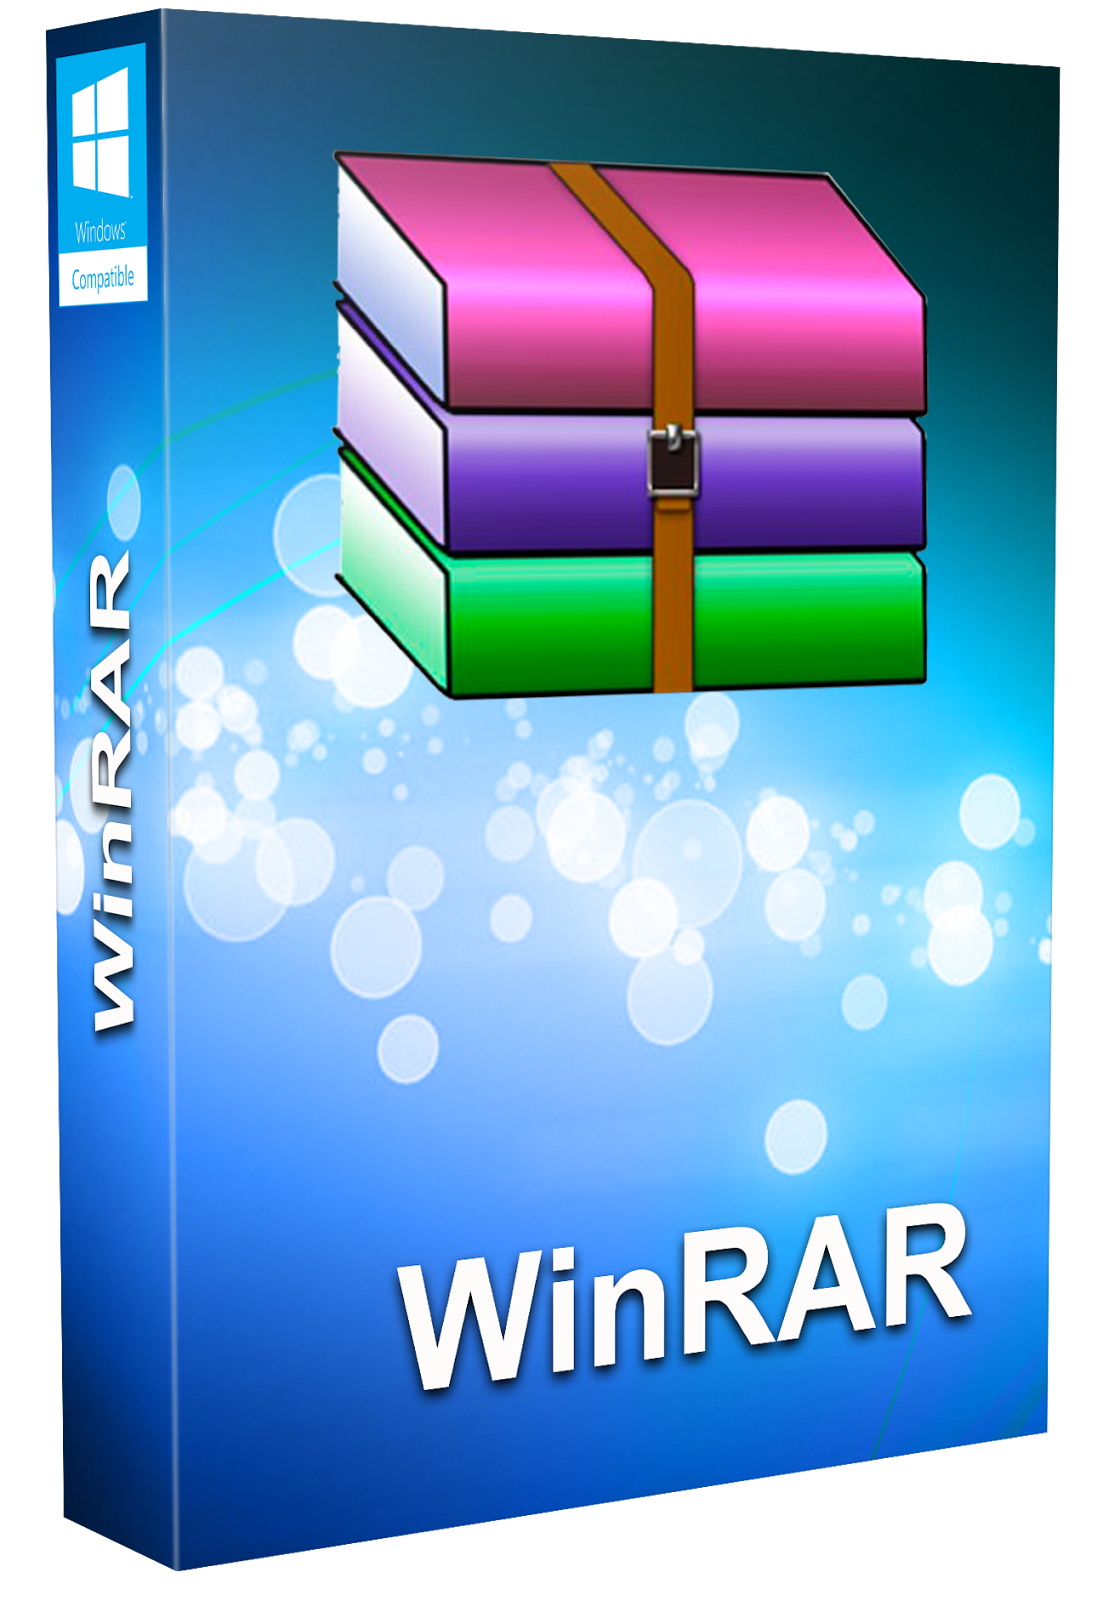 download winrar 5 64 bit full version